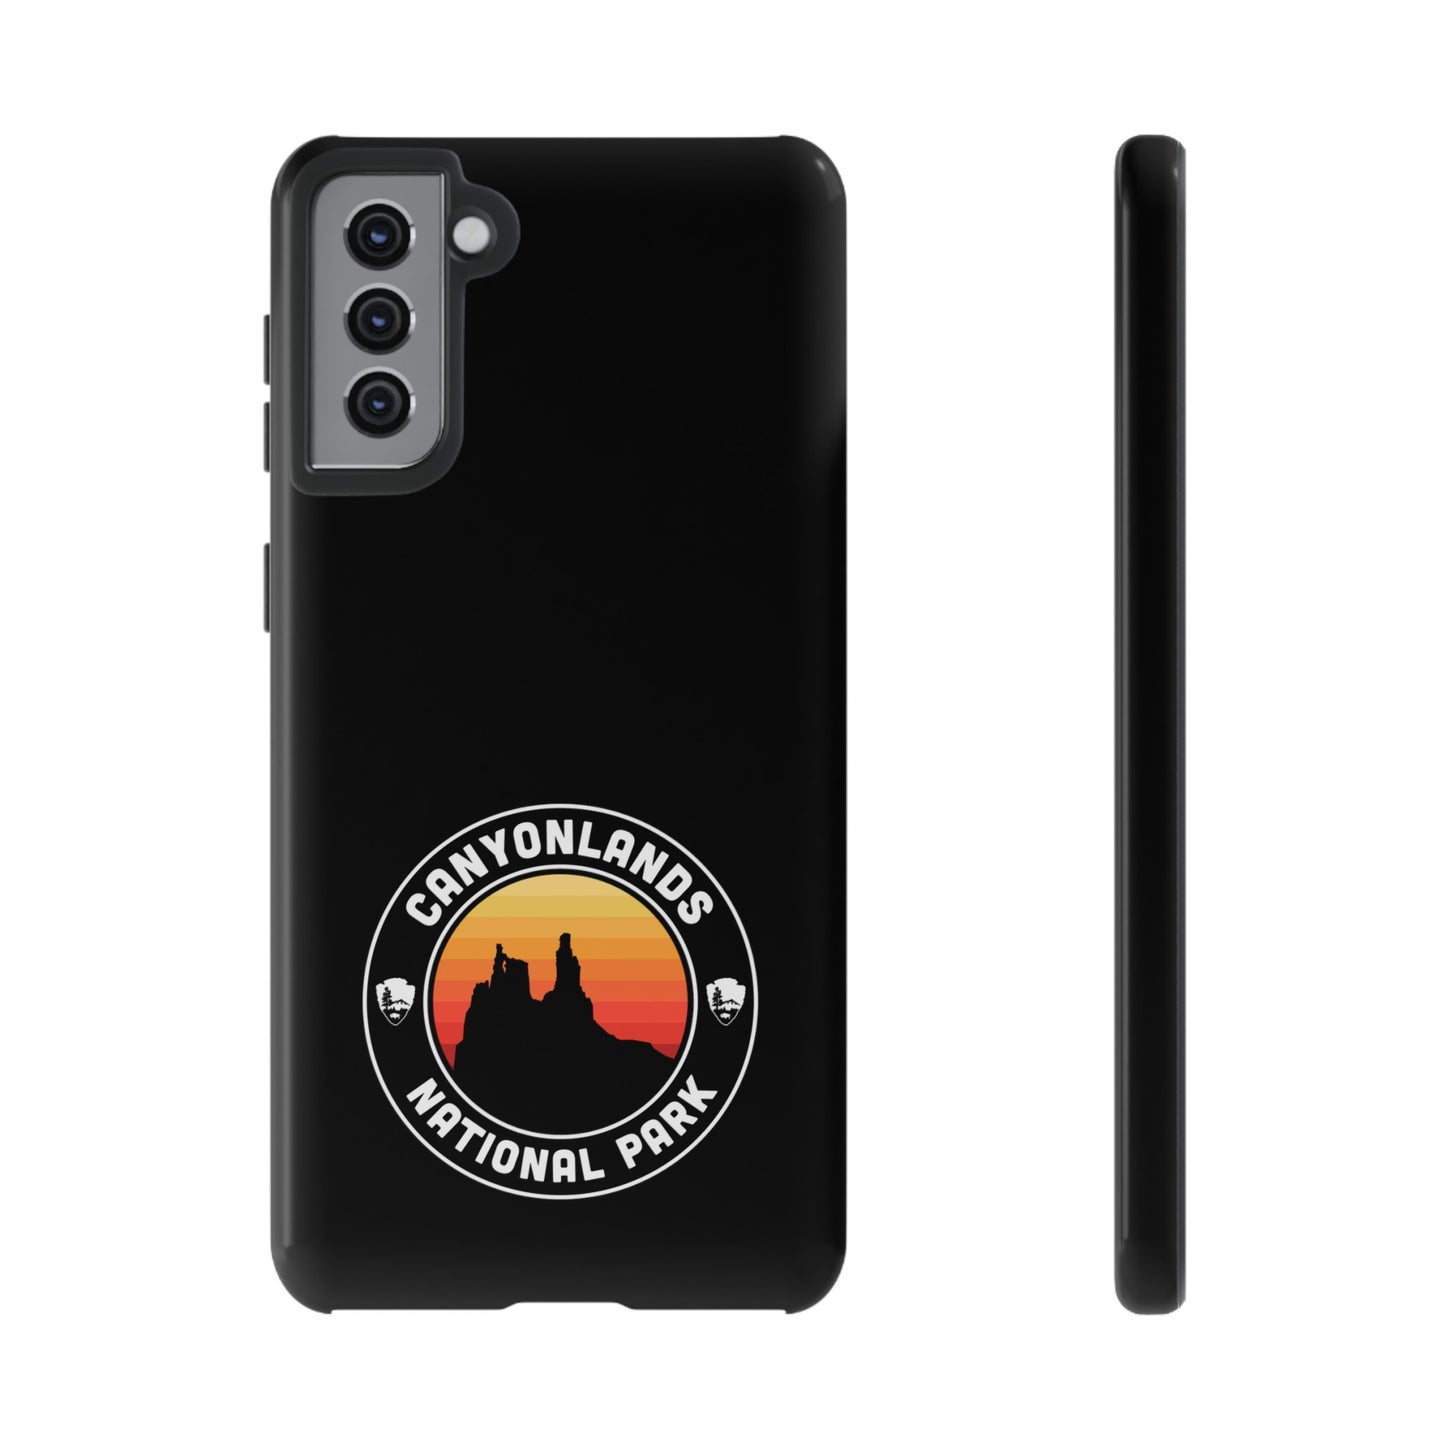 Canyonlands National Park Phone Case - Round Emblem Design